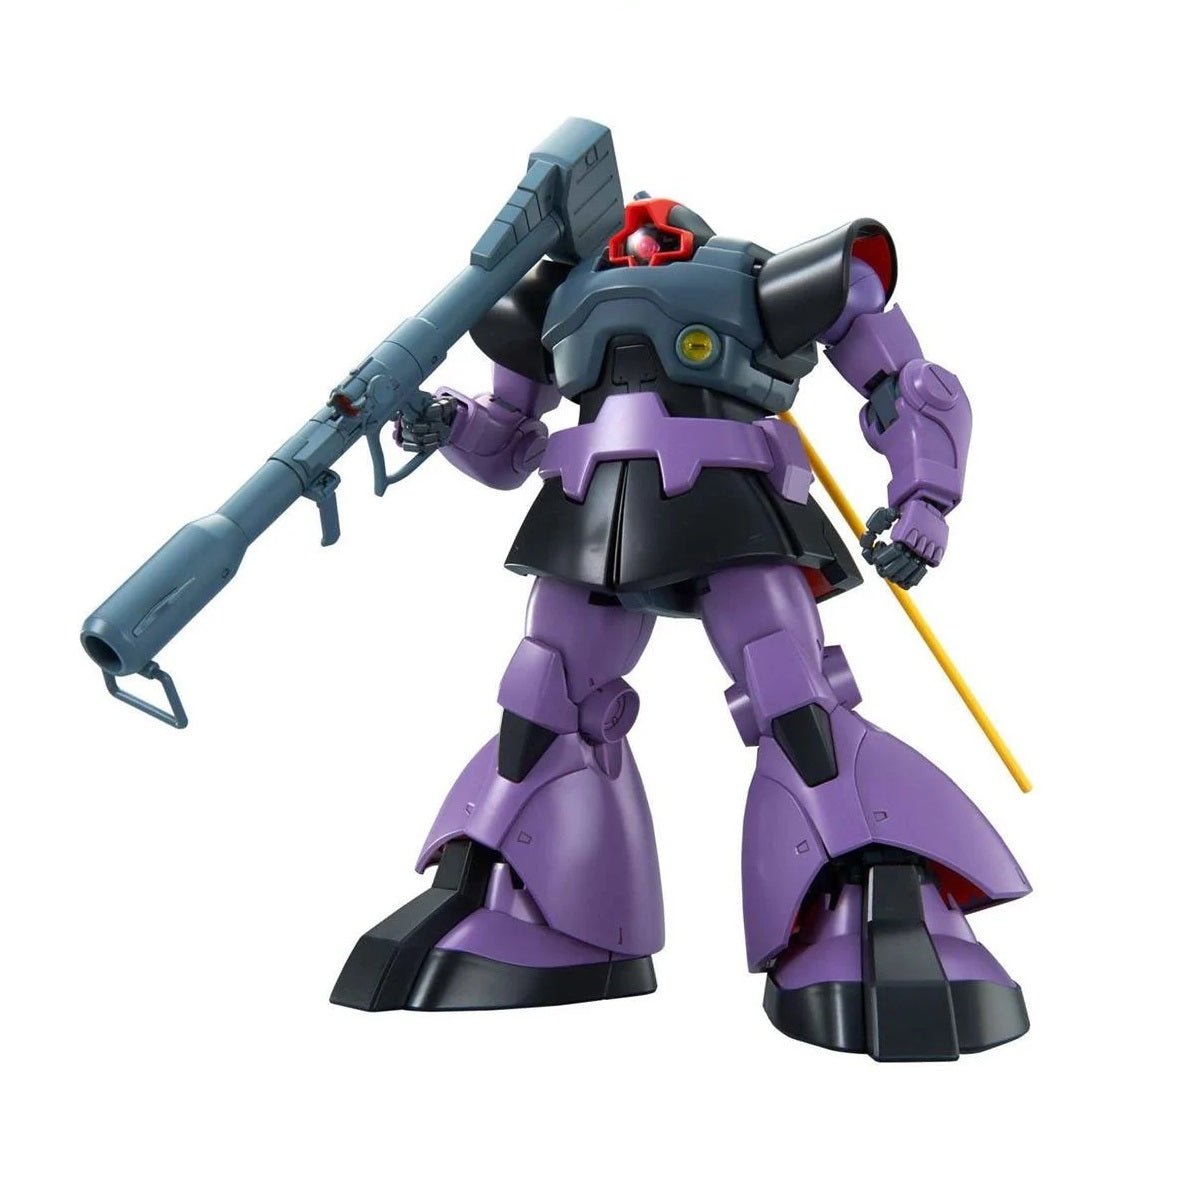 Bandai MS - 09 Dom "Mobile Gundam Suit" Master Grade Plastic Model Kit, 1/100 Scale - Micro - Mark Scale Model Kits